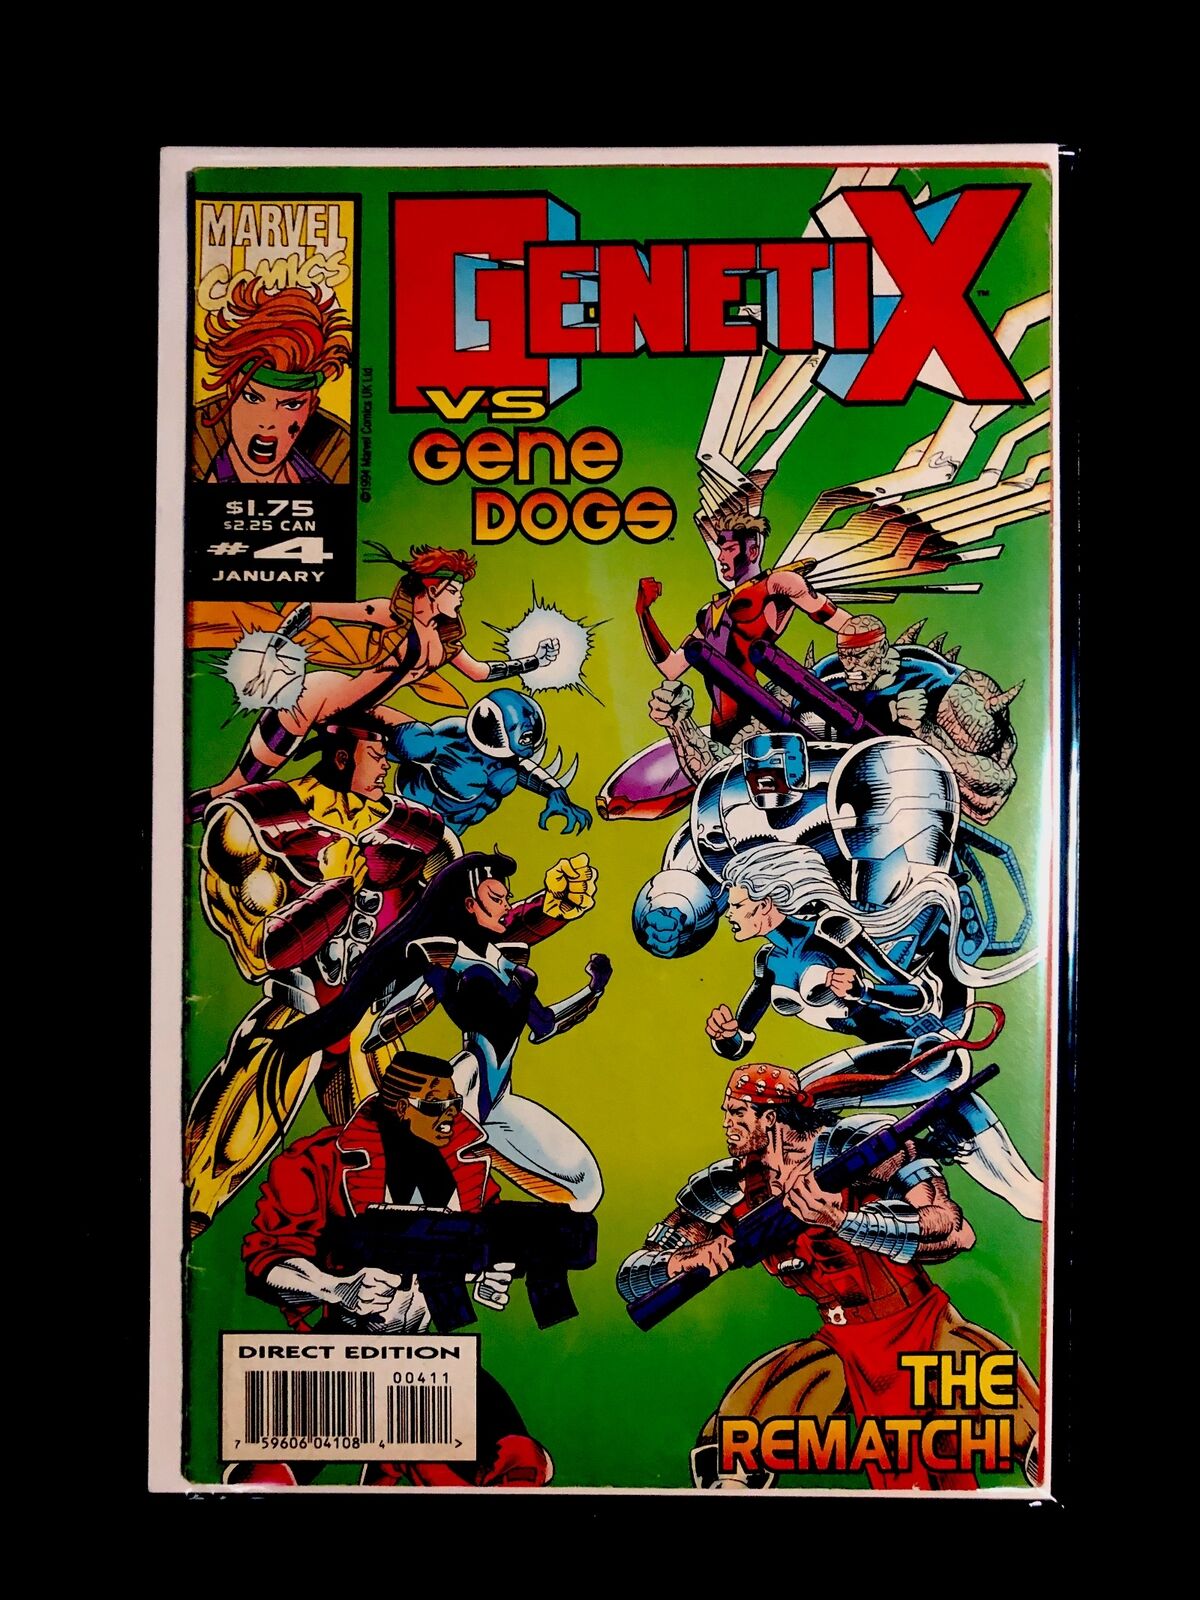 1994 Marvel Comics UK GenetiX vs Gene Dogs #4 Comic Book Vintage Rematch